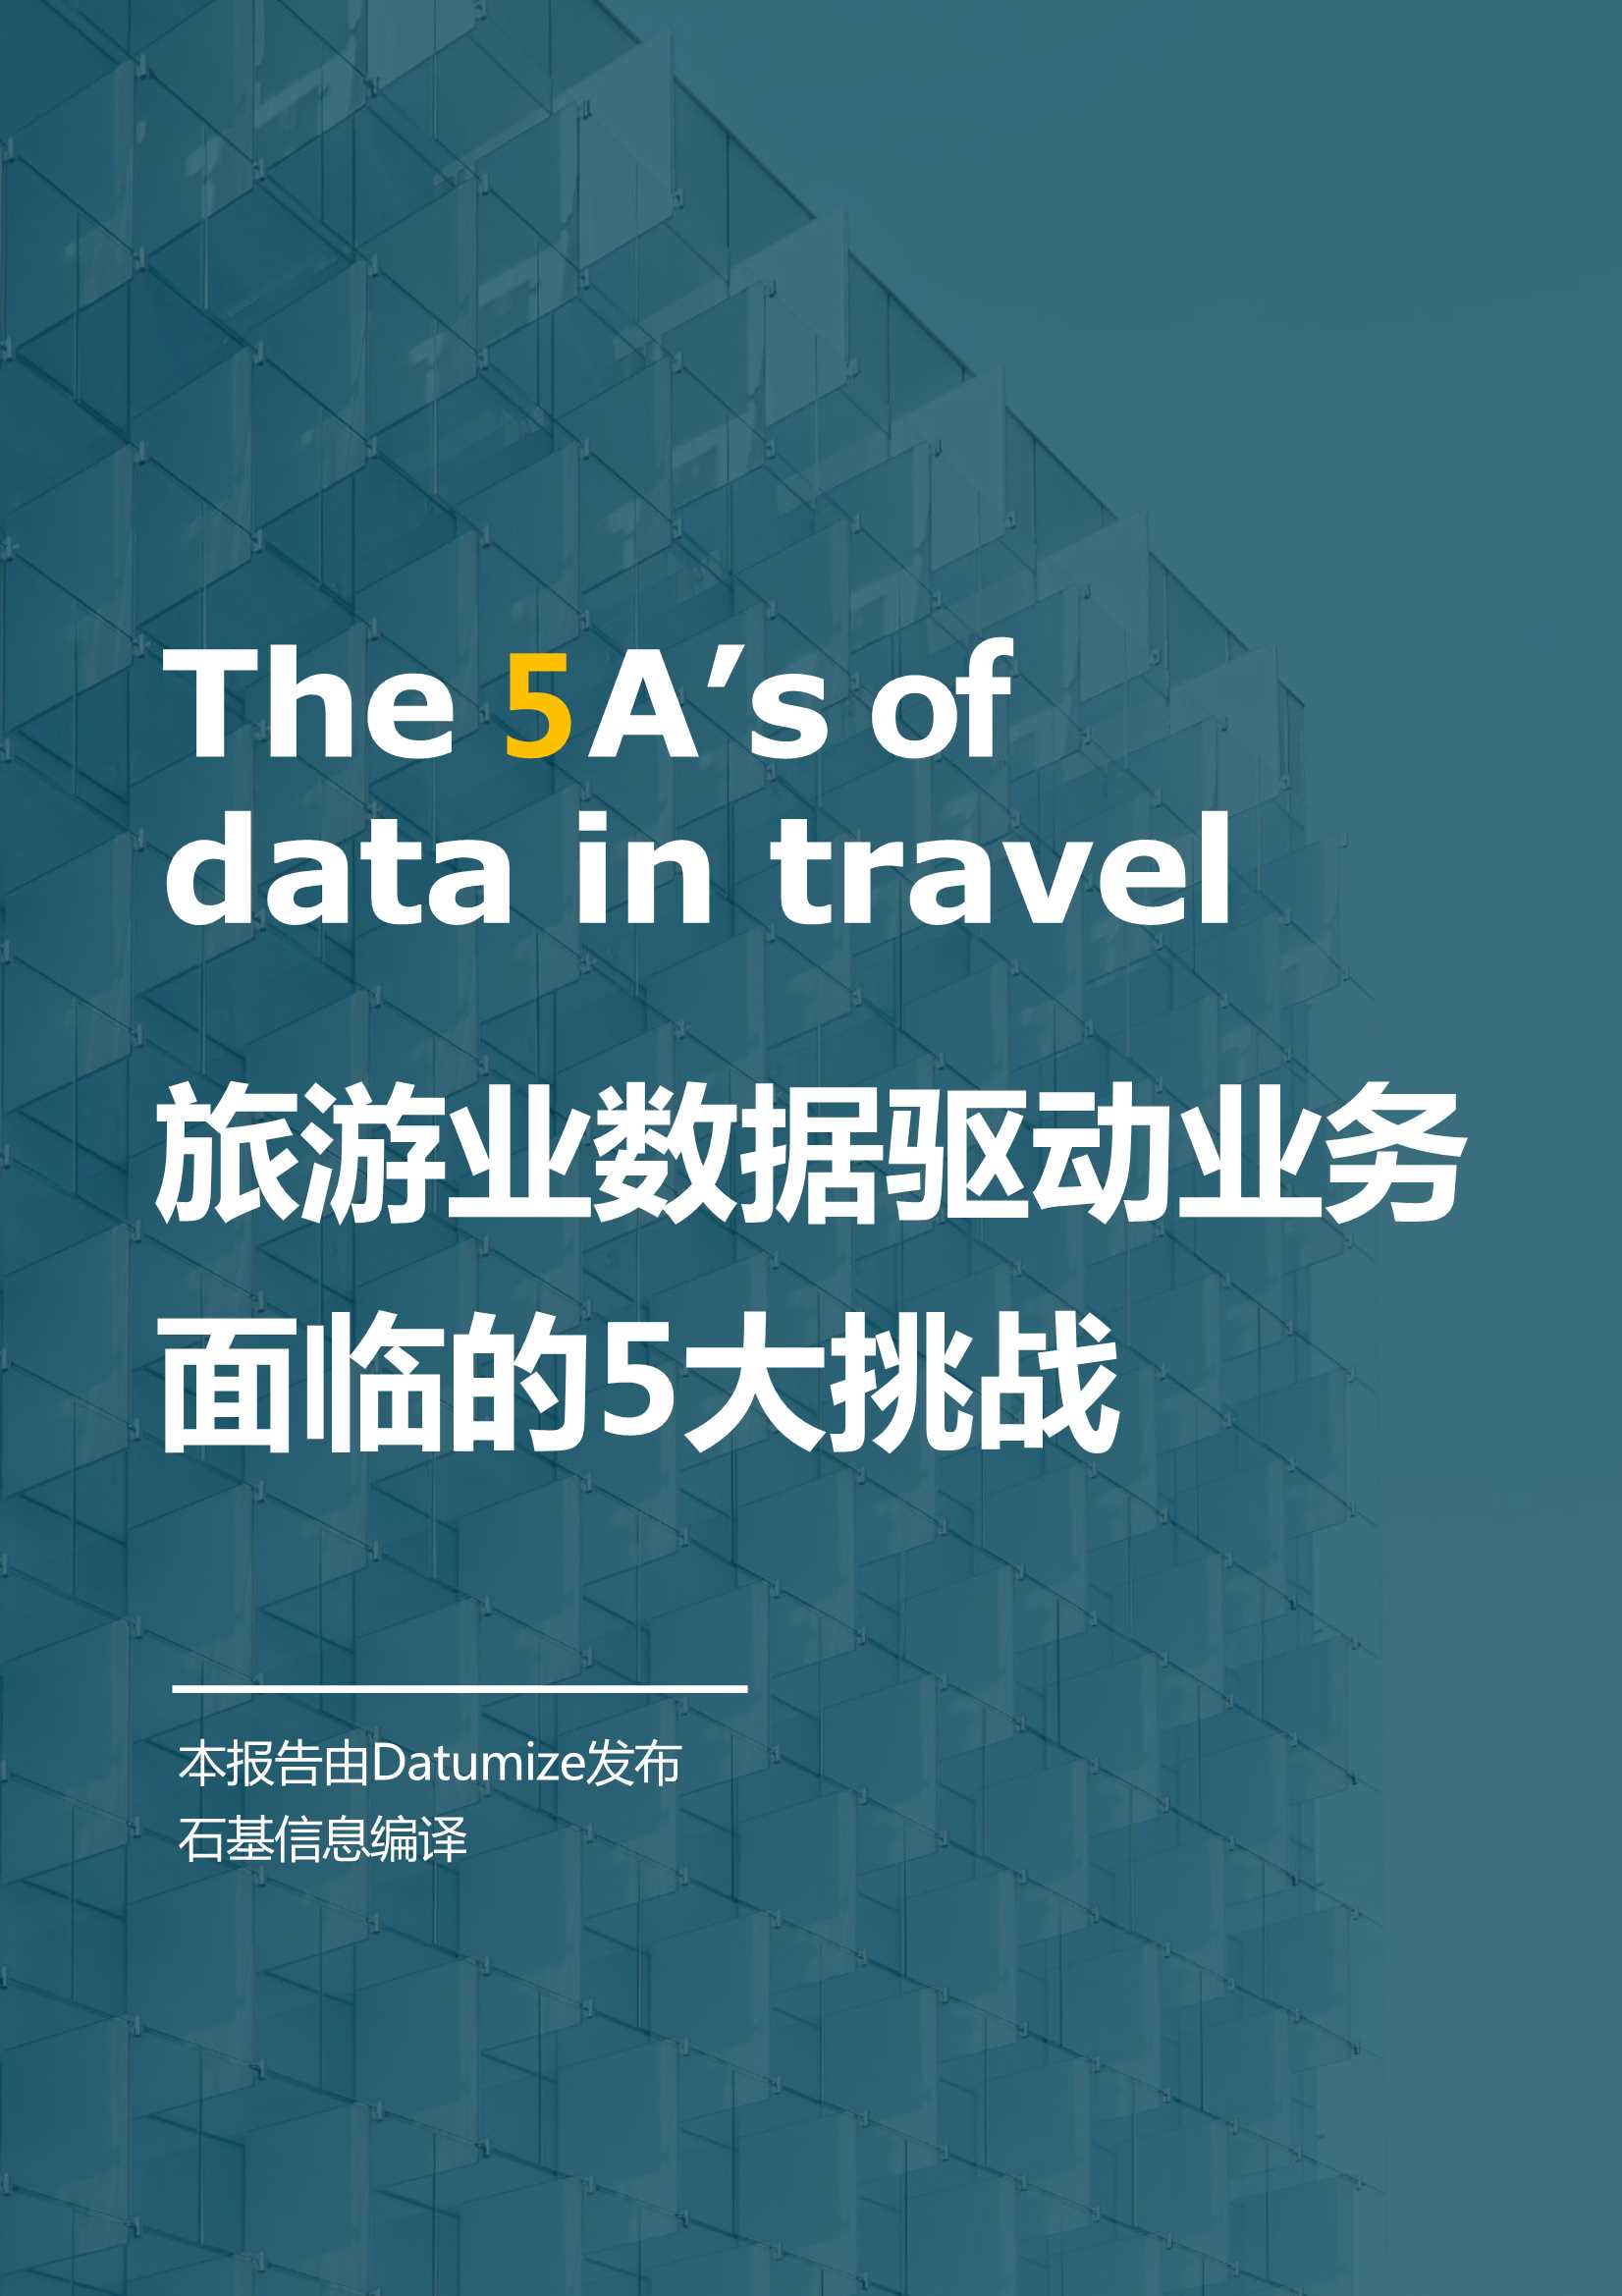 Datumize&石基信息-旅游业数据驱动业务面临的5大挑战-2021.05-25页